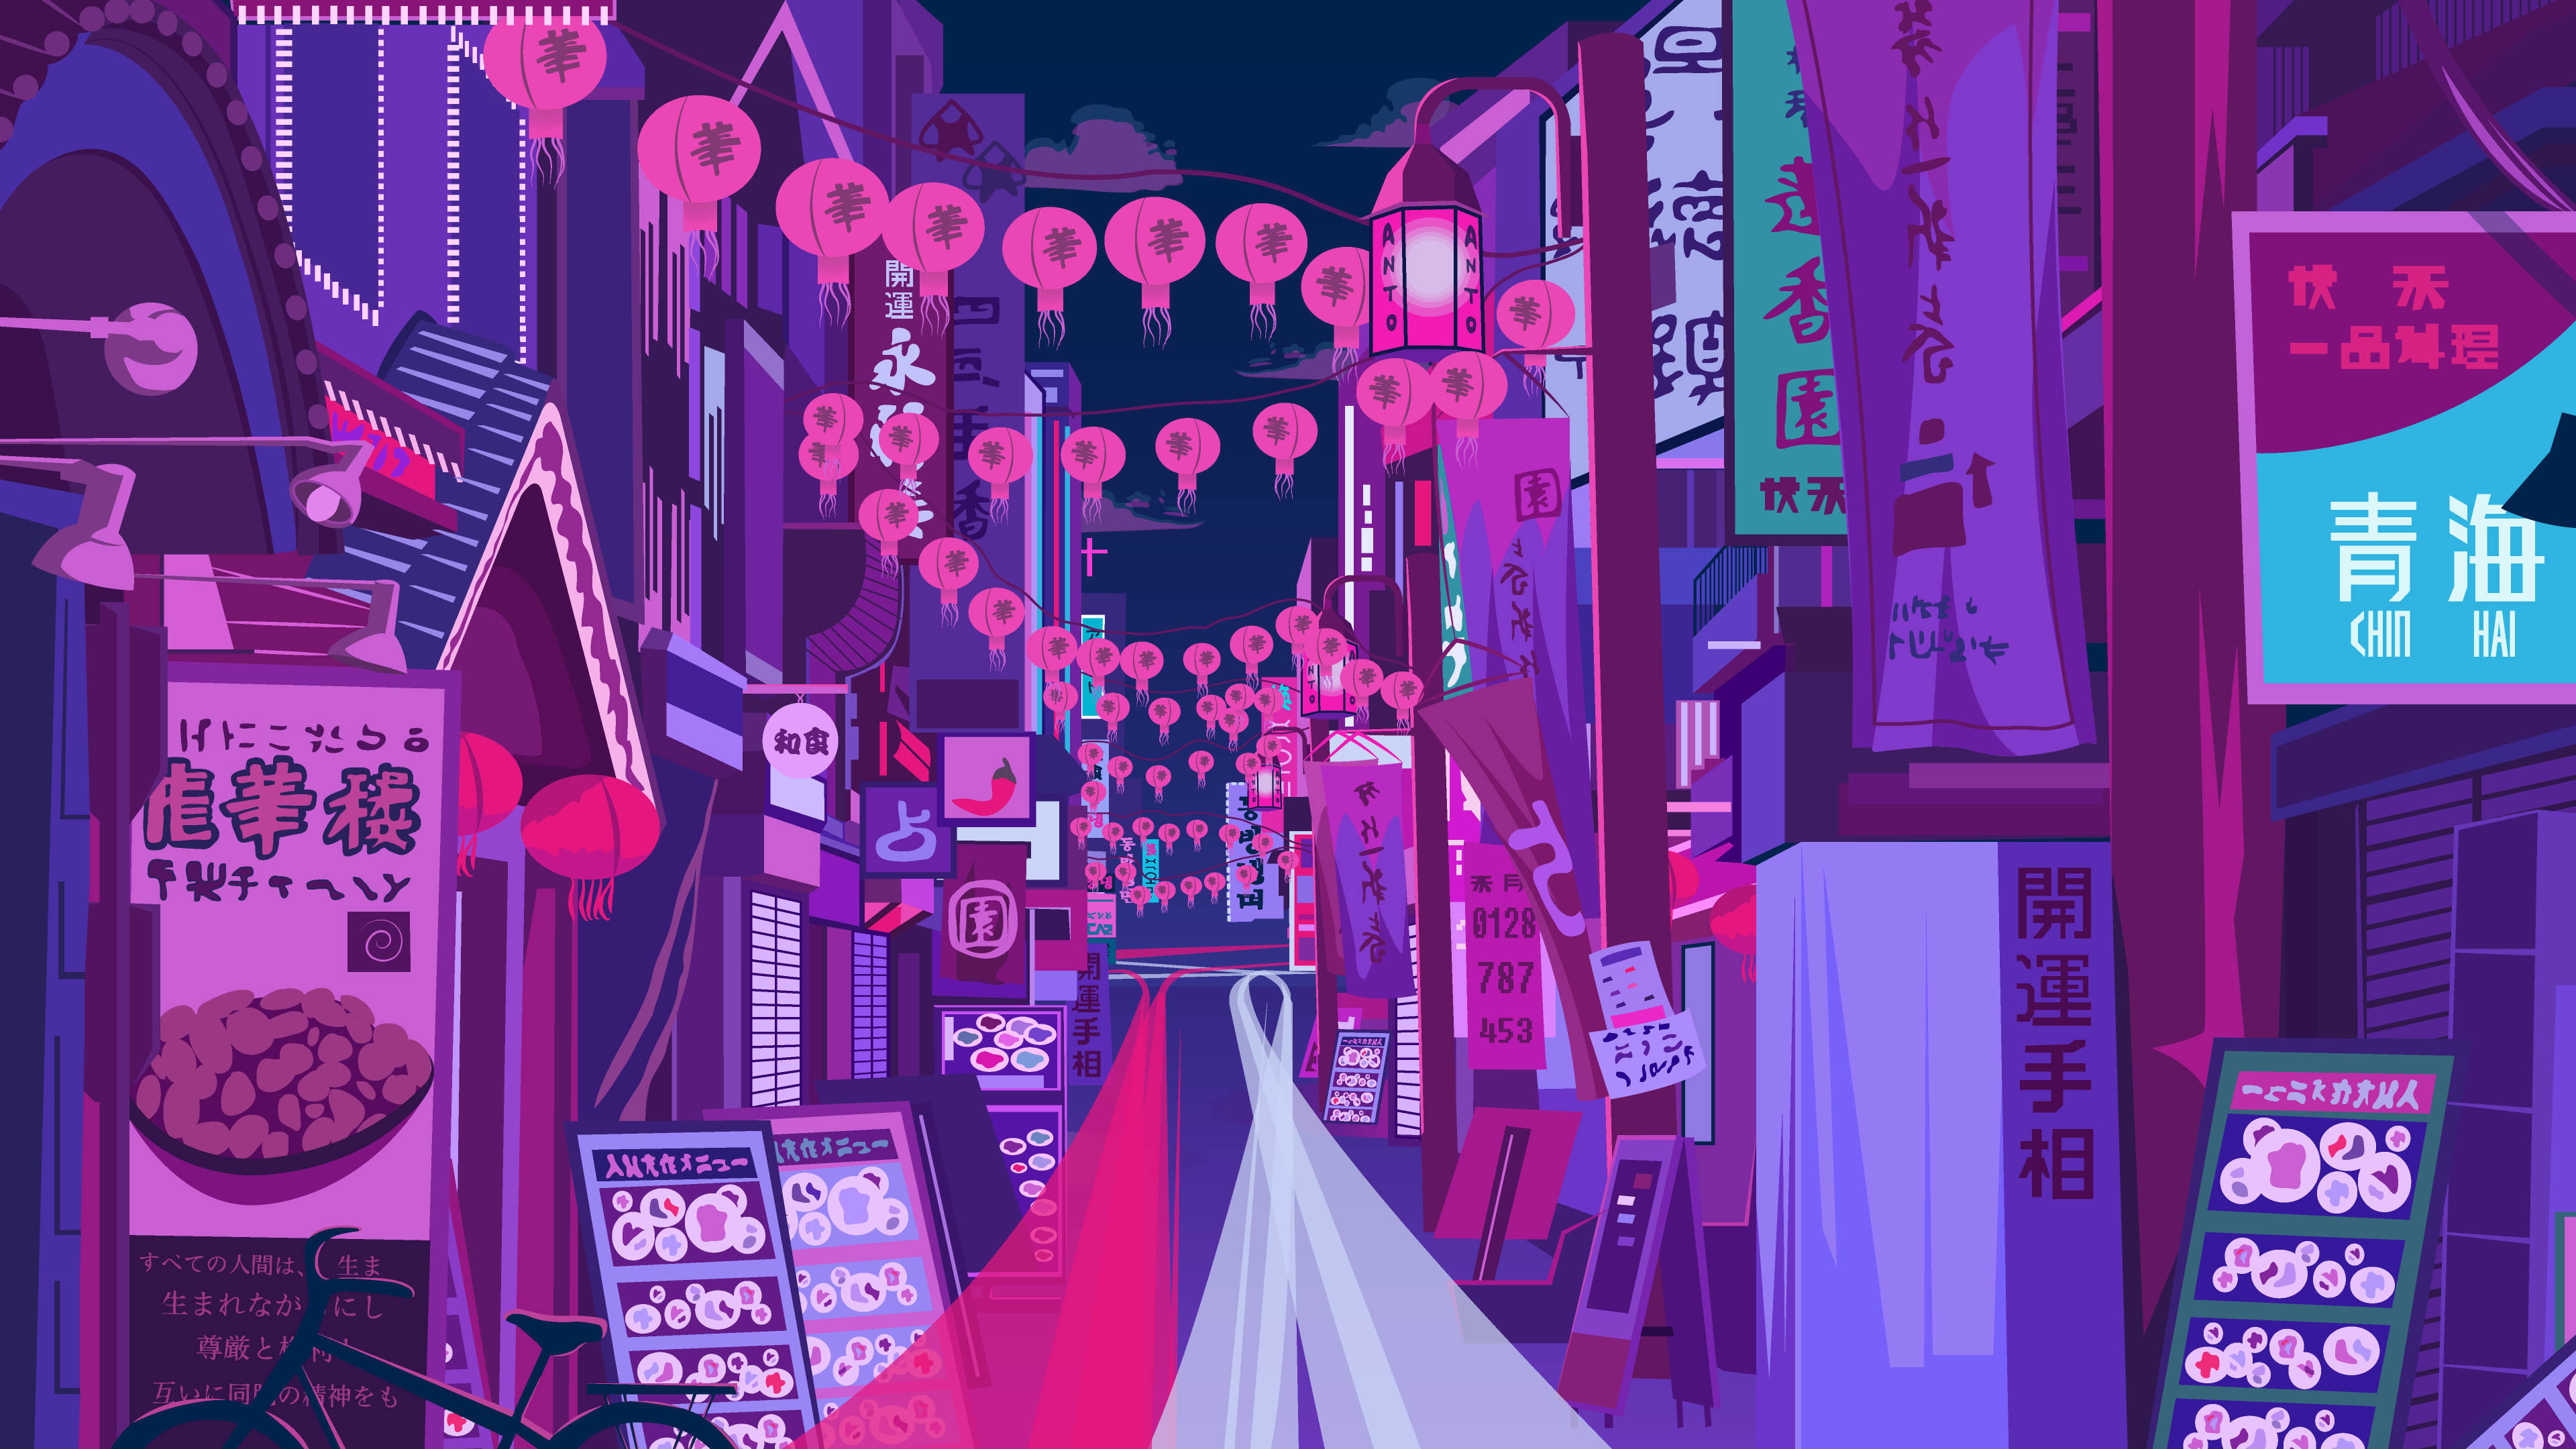 General 3840x2160 city lights city town shutters lantern Lantern Festival paper lantern neon Japan alleyway building stores store front pink blue purple antographics